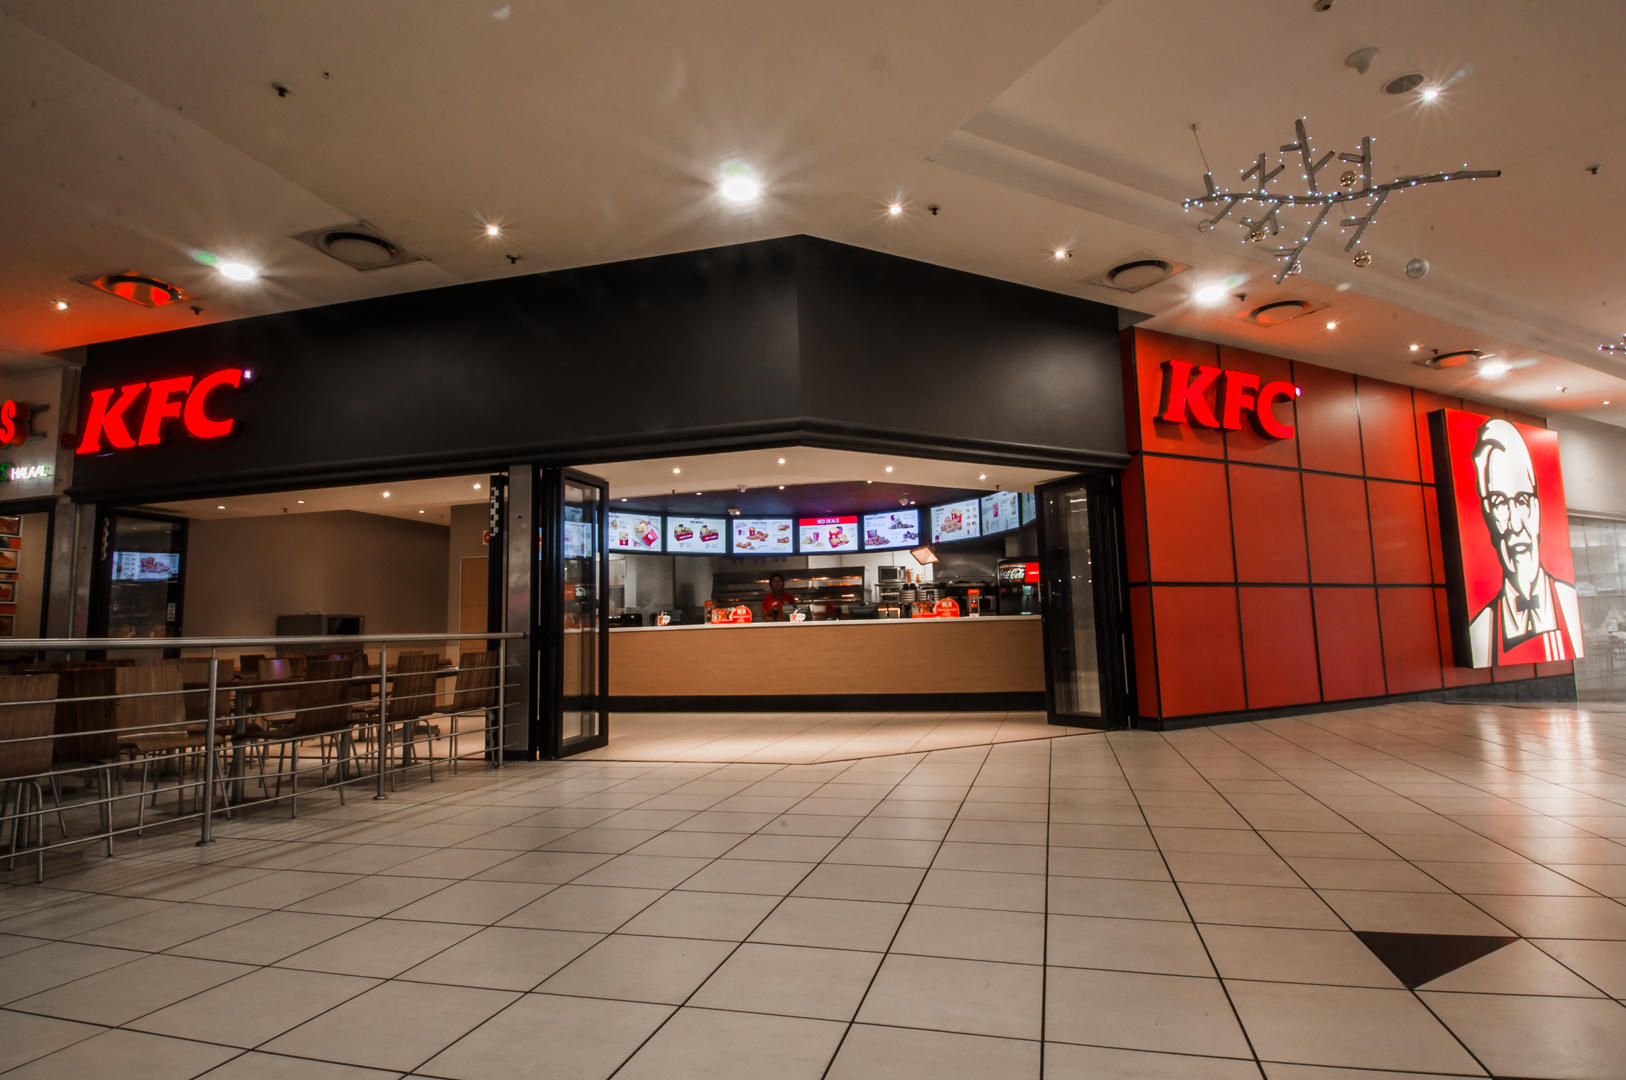 KFC Southgate Mall - RESTAURANTS, RESTAURANTS: FAST FOOD AND SELF